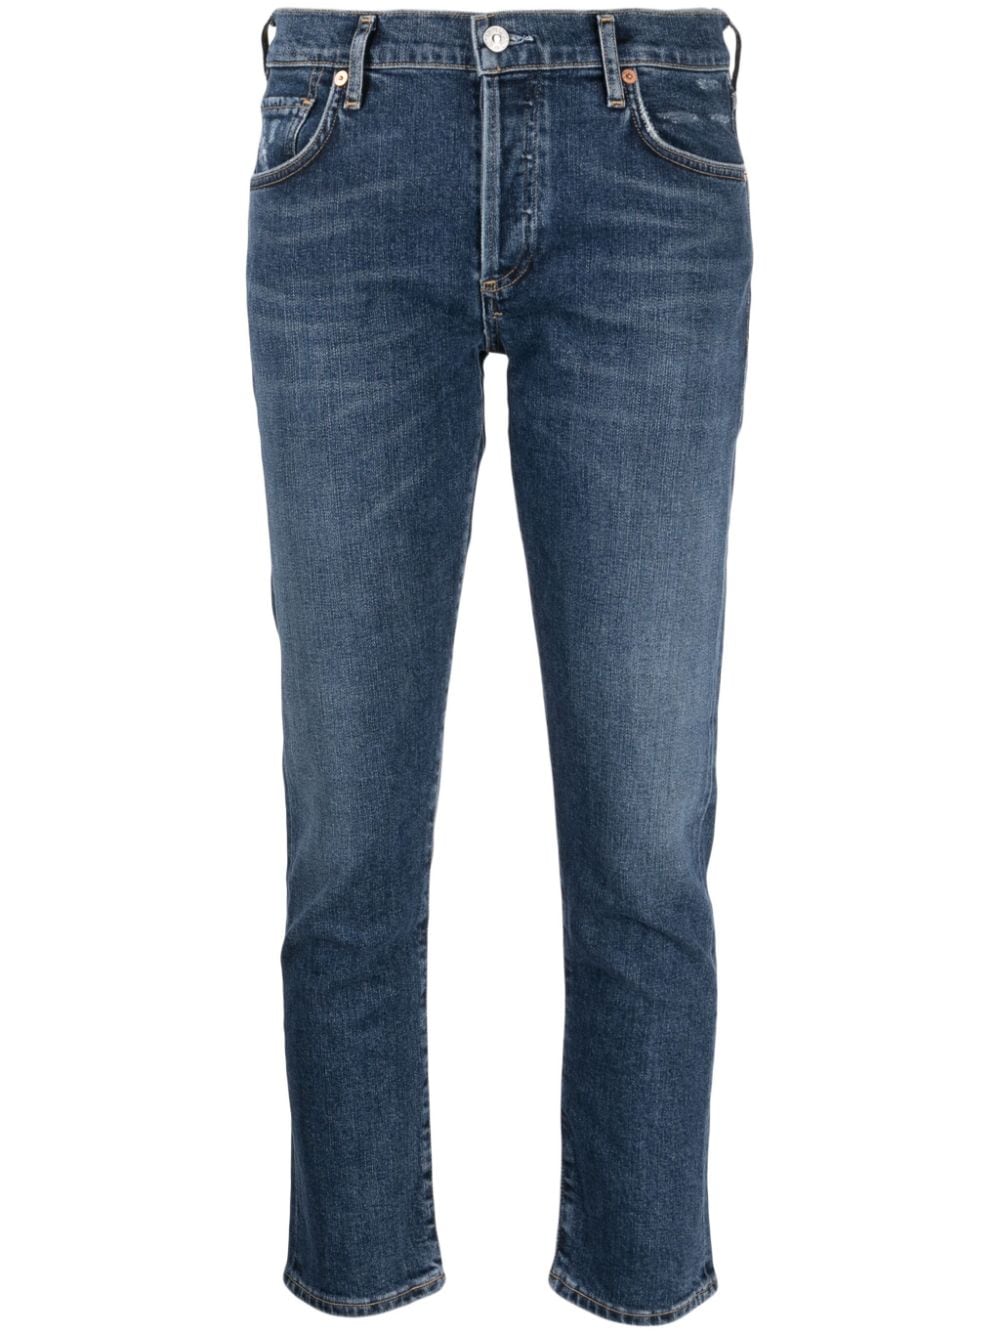 Emerson cropped boyfriend jeans